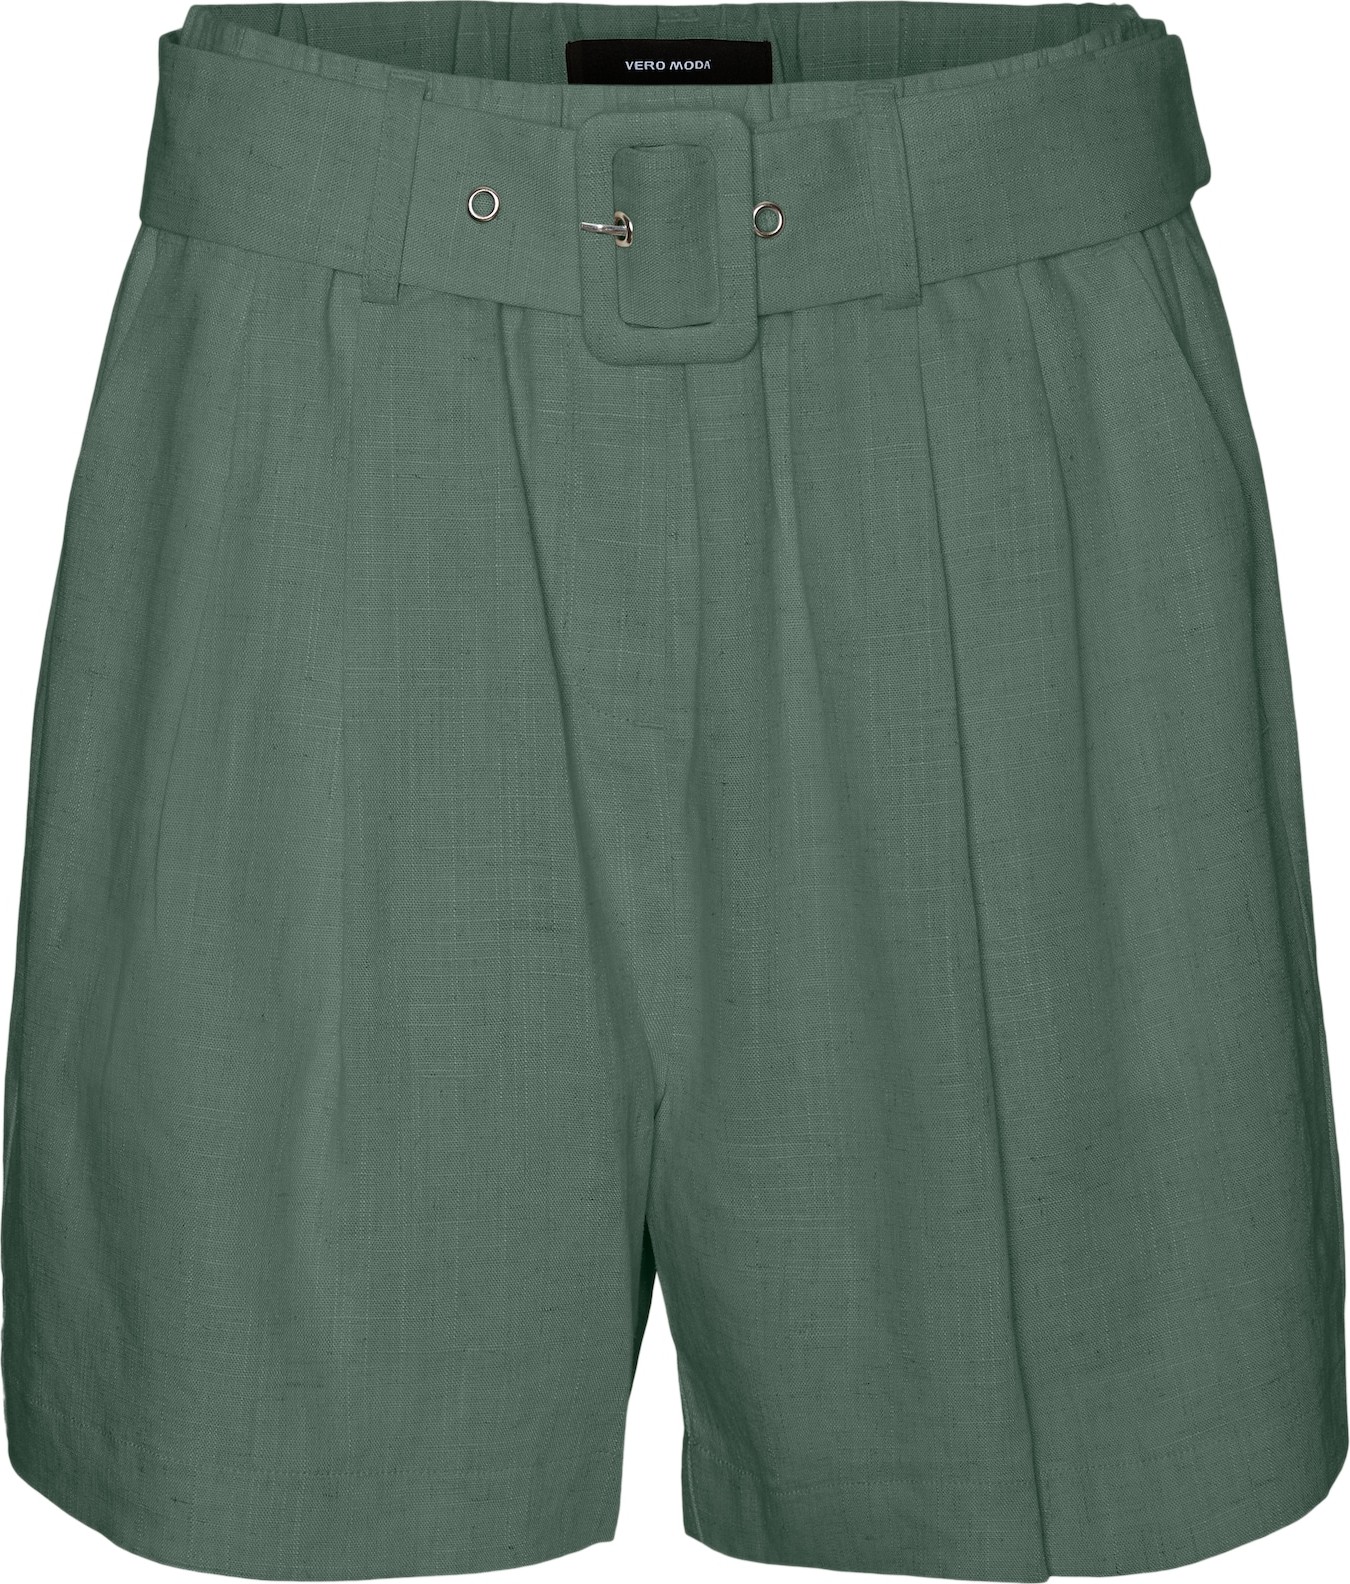 VERO MODA Kalhoty se sklady v pase 'Amelia' tmavě zelená